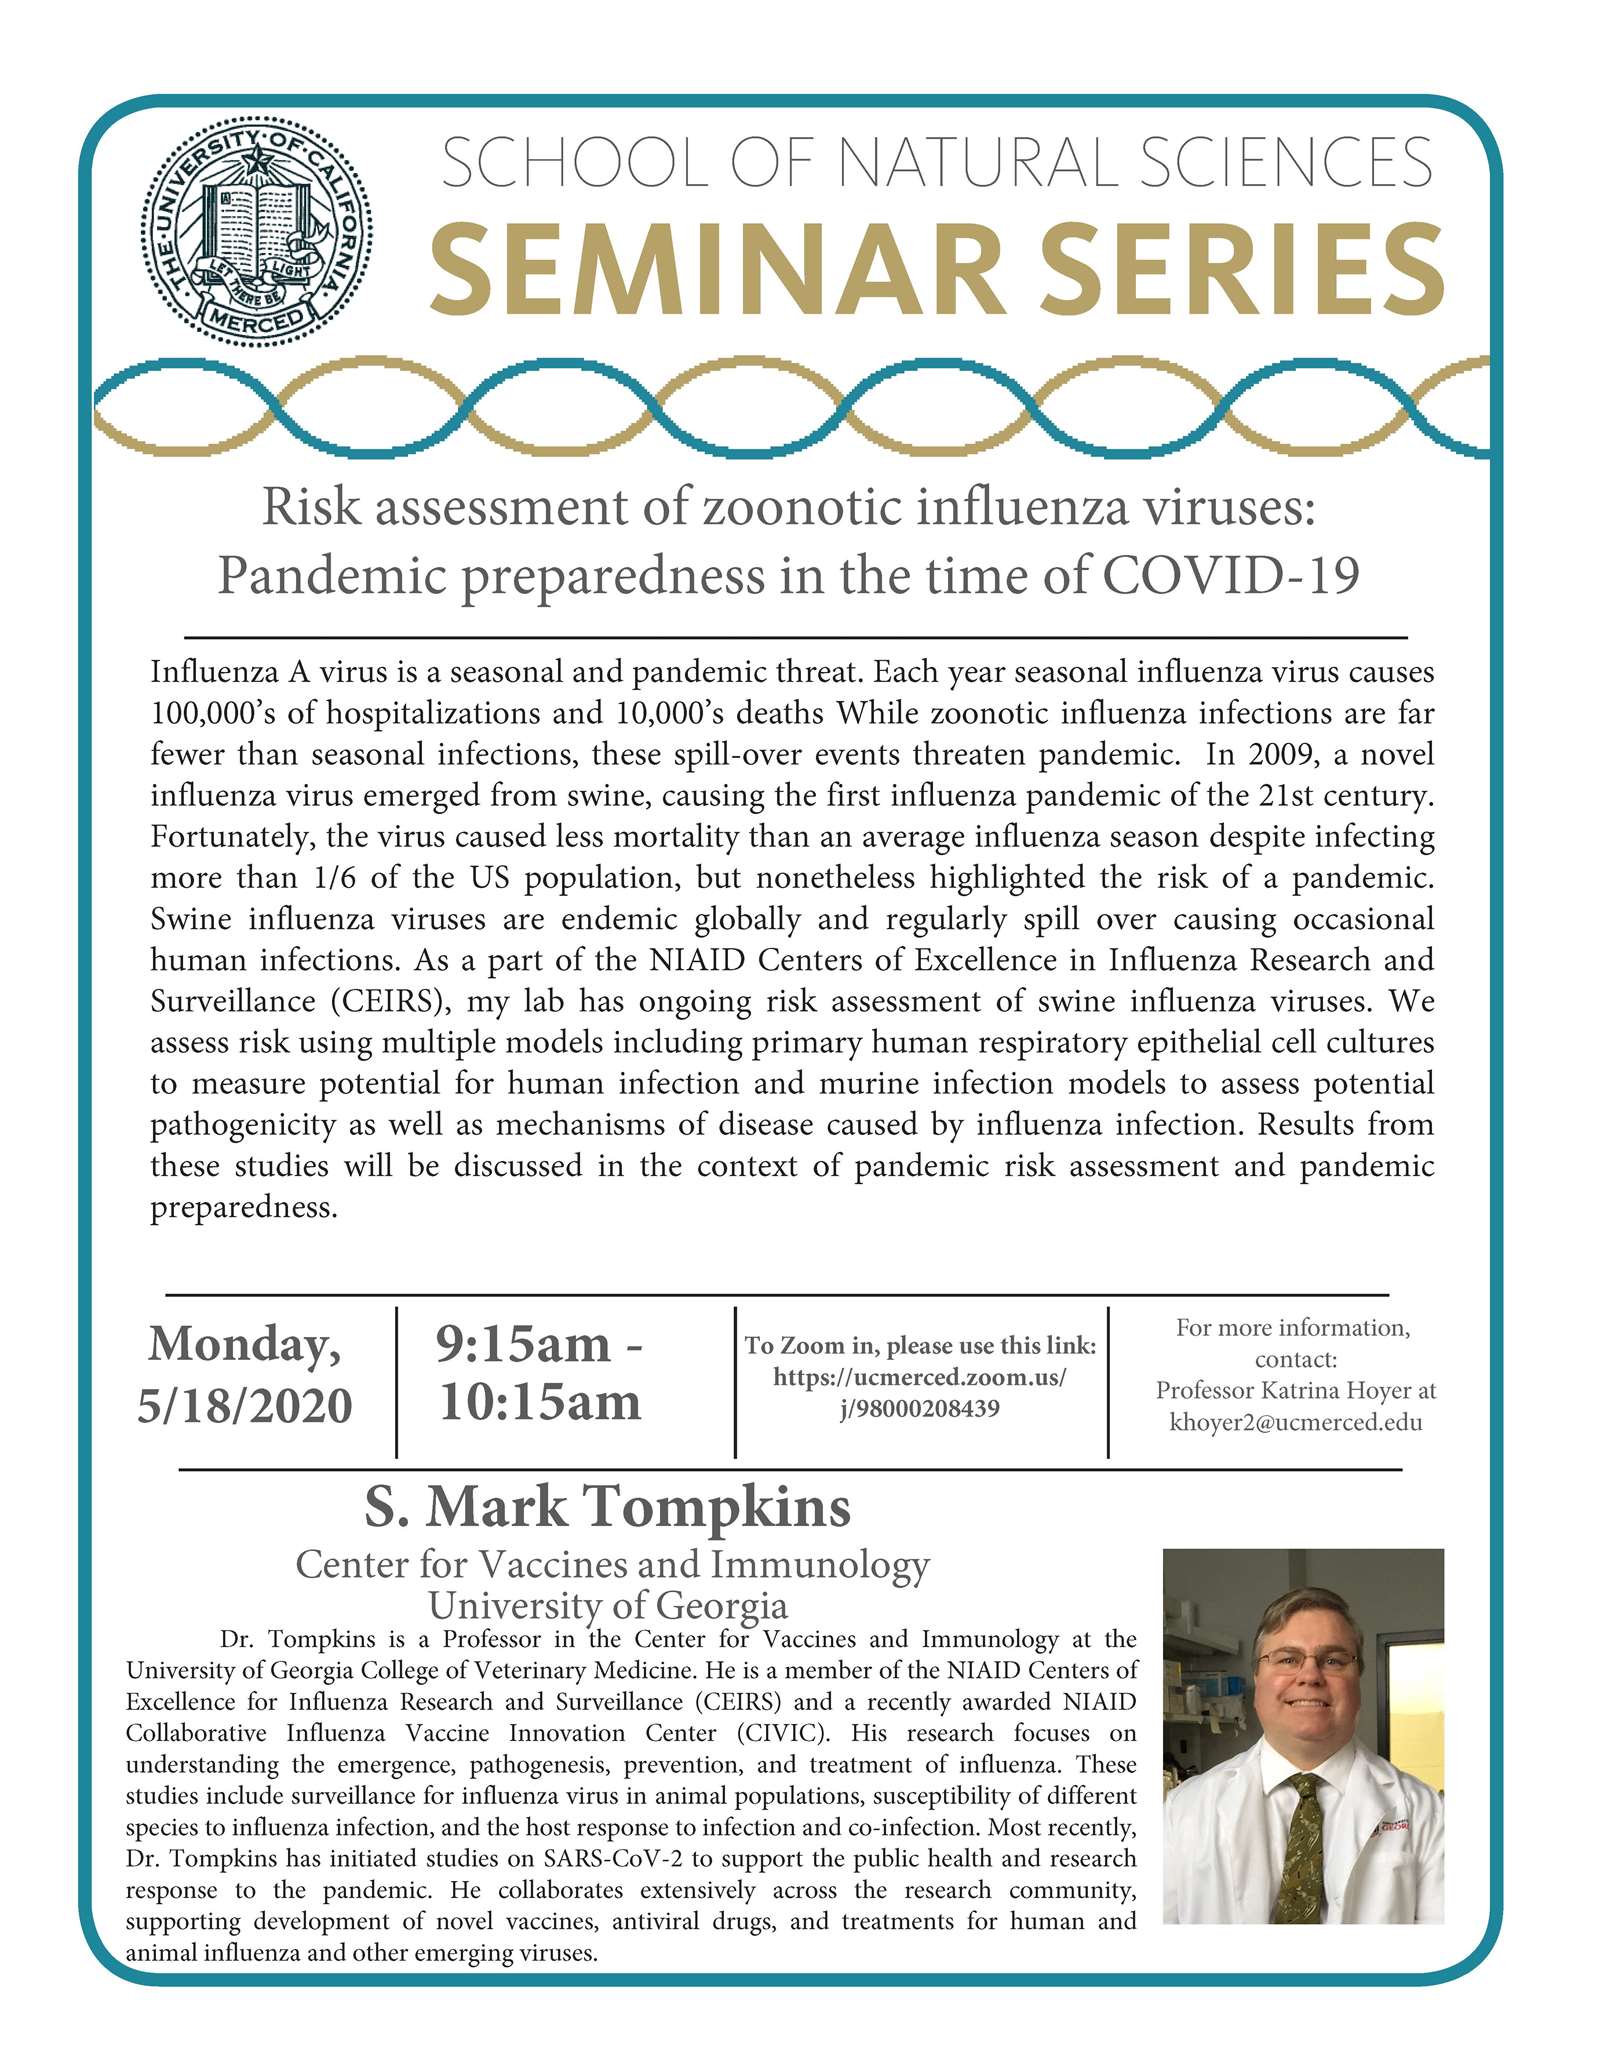 MCB Seminar for Dr. S. Mark Tompkins